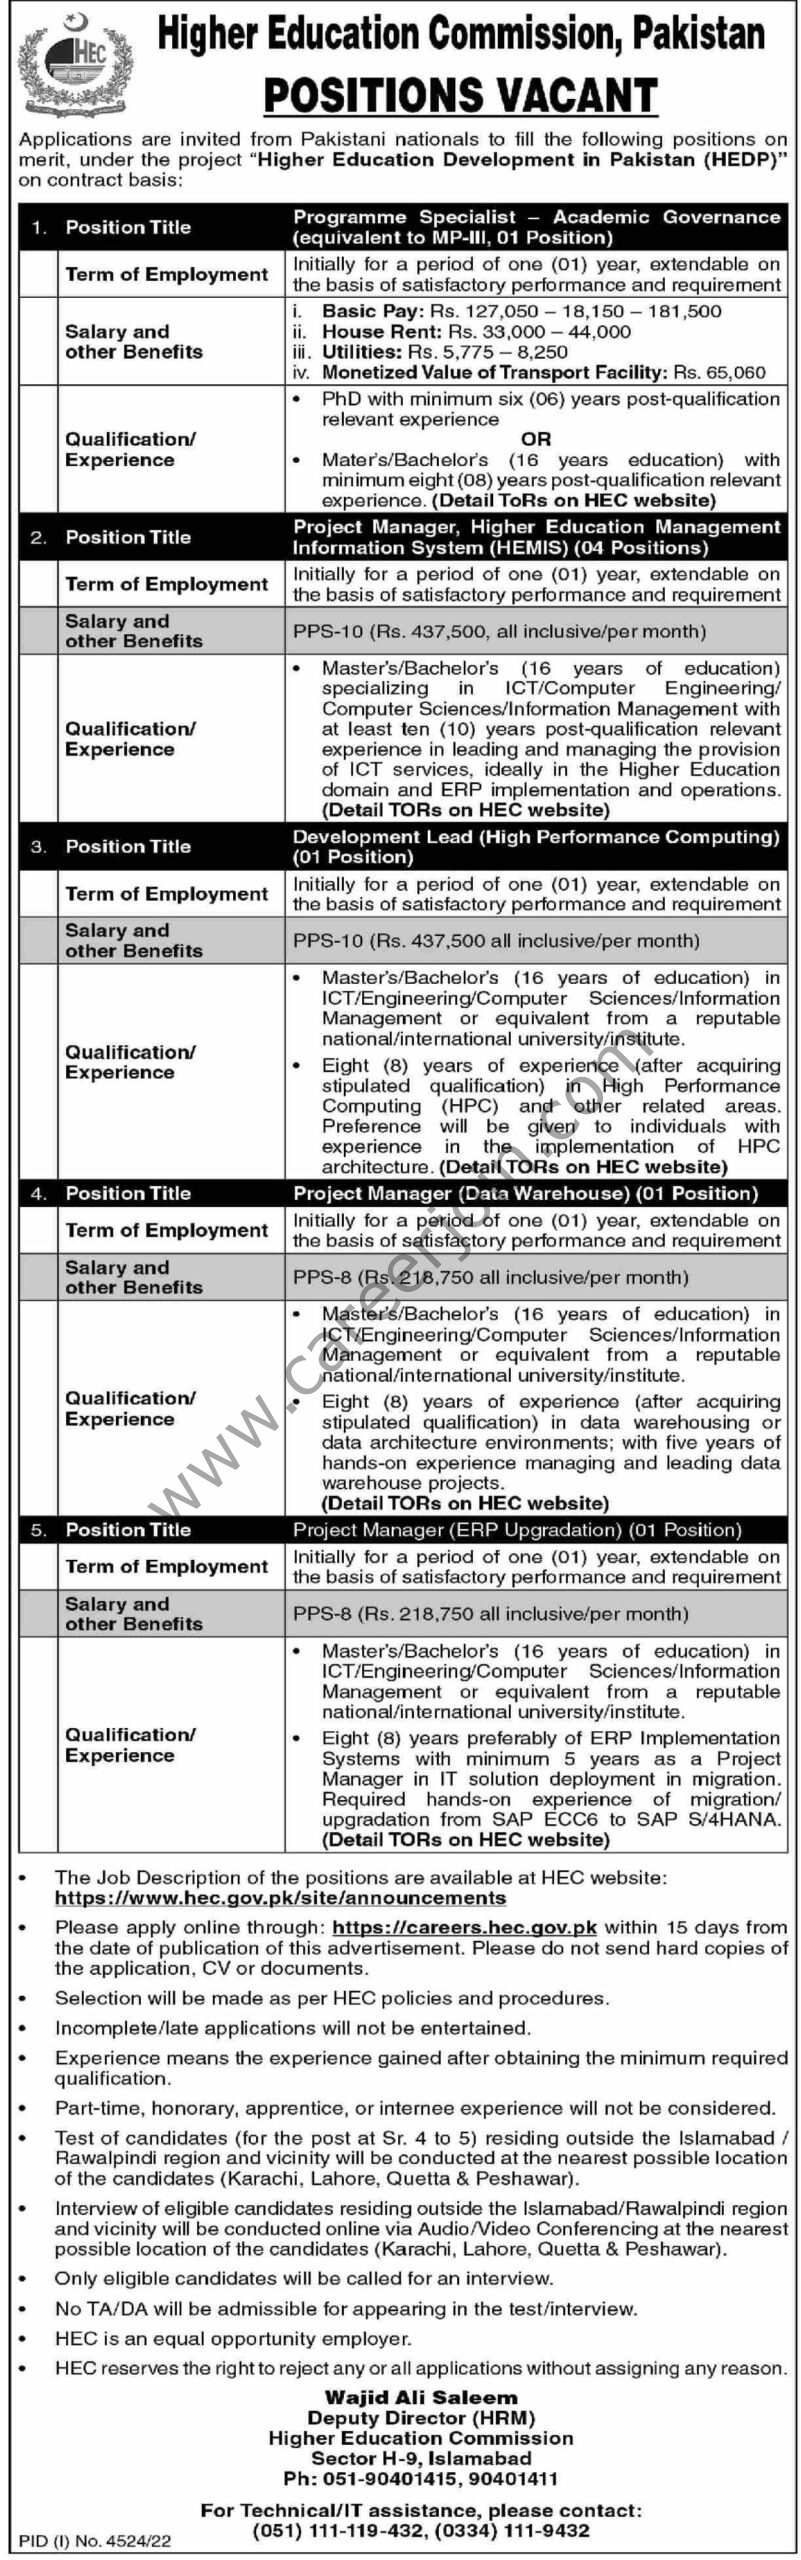 HEC Higher Education Commission Jobs 22 January 2023 Express Tribune 1